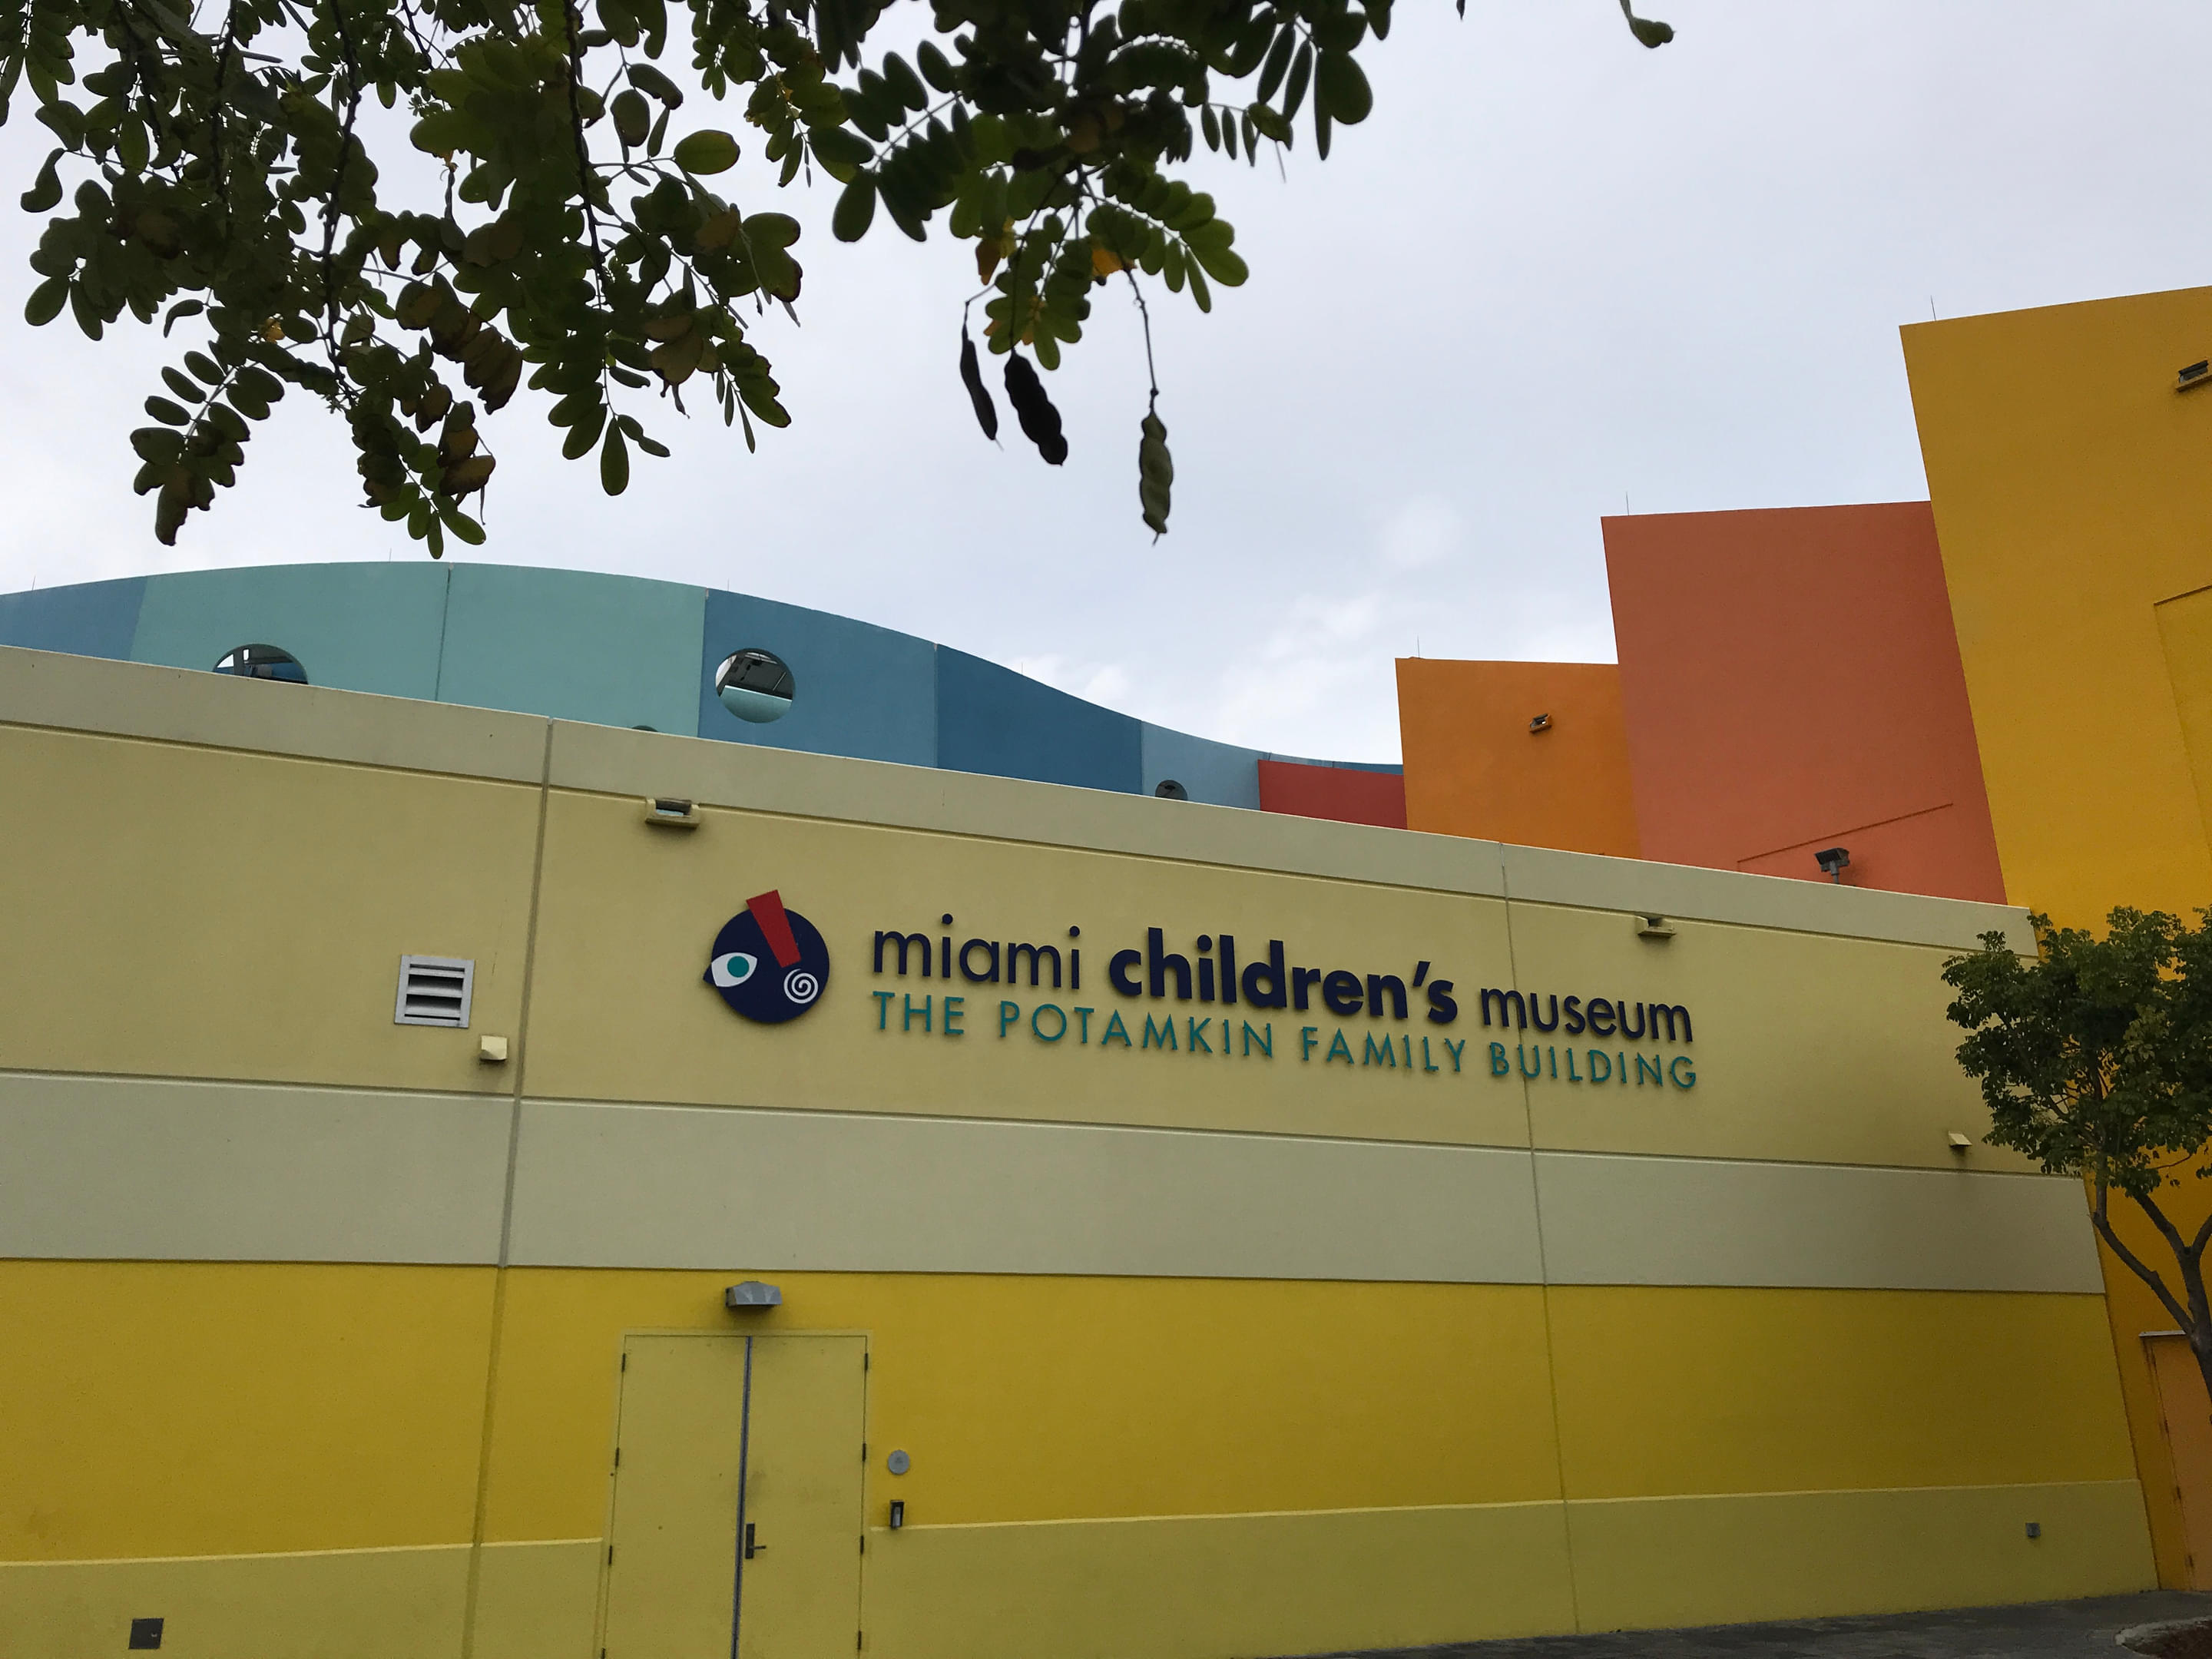 Miami Children's Museum Overview